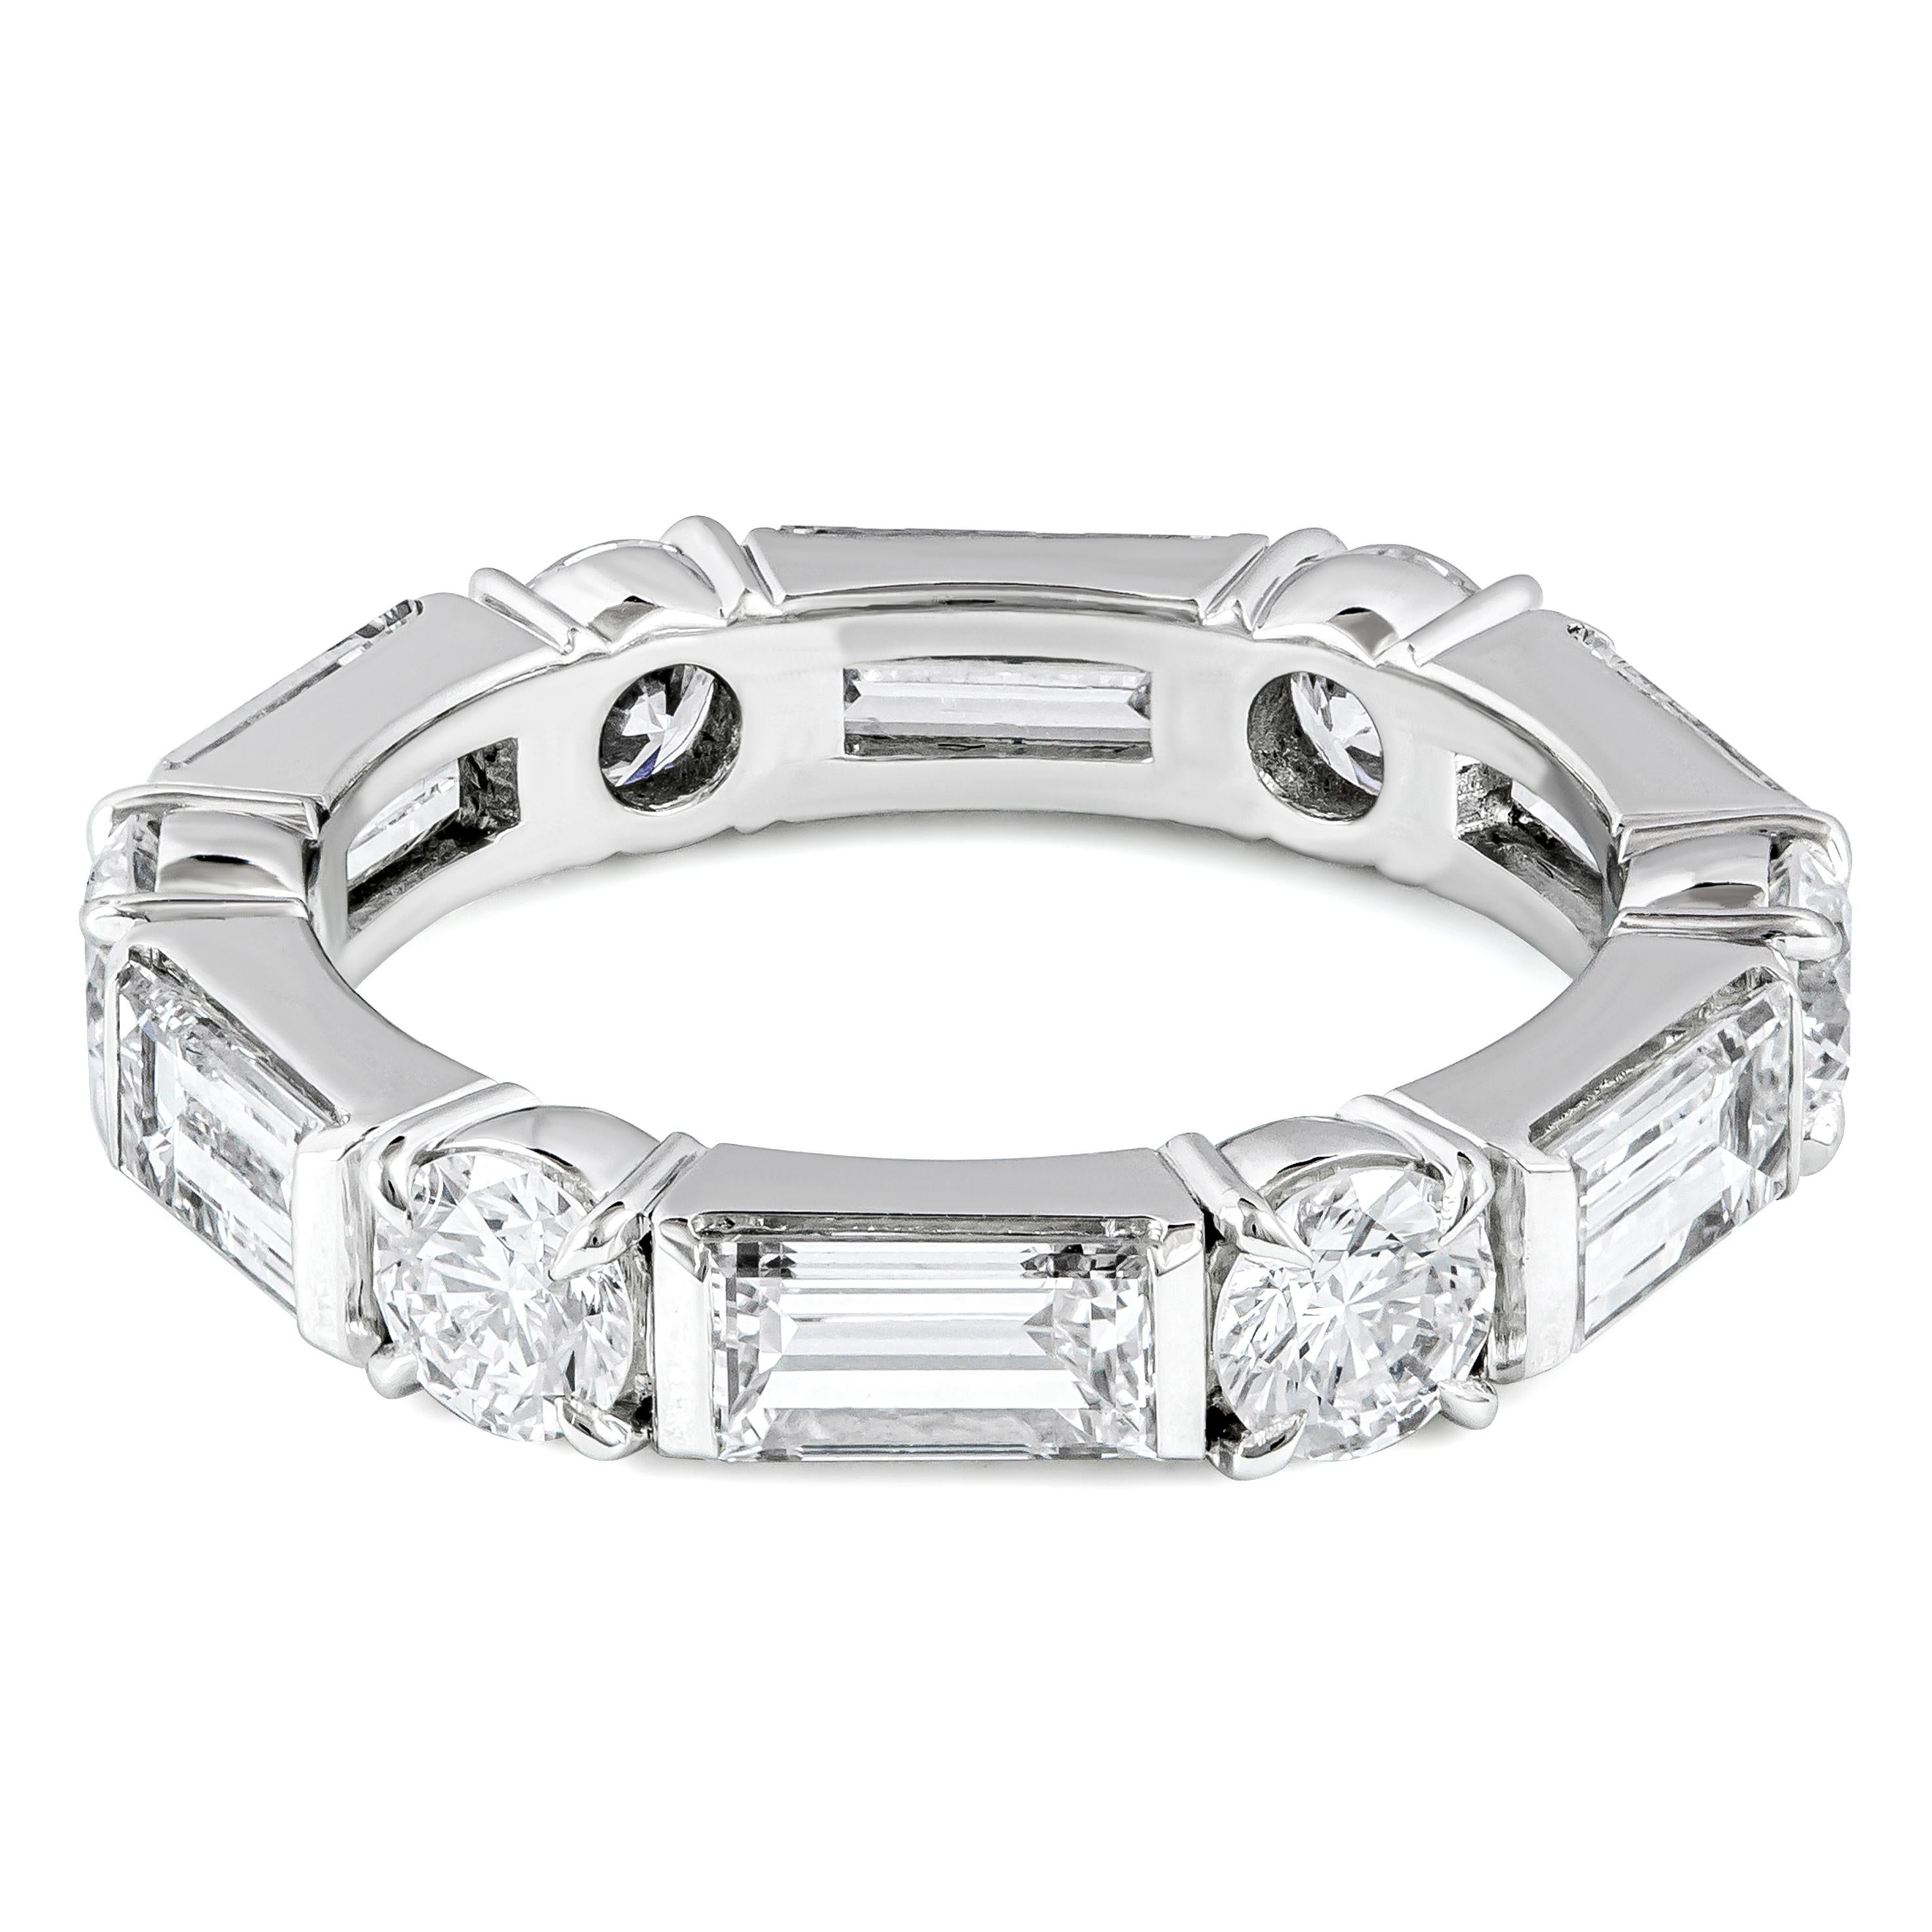 Roman Malakov 3.72 Carats Total Mixed Cut Diamonds Eternity Wedding Band For Sale